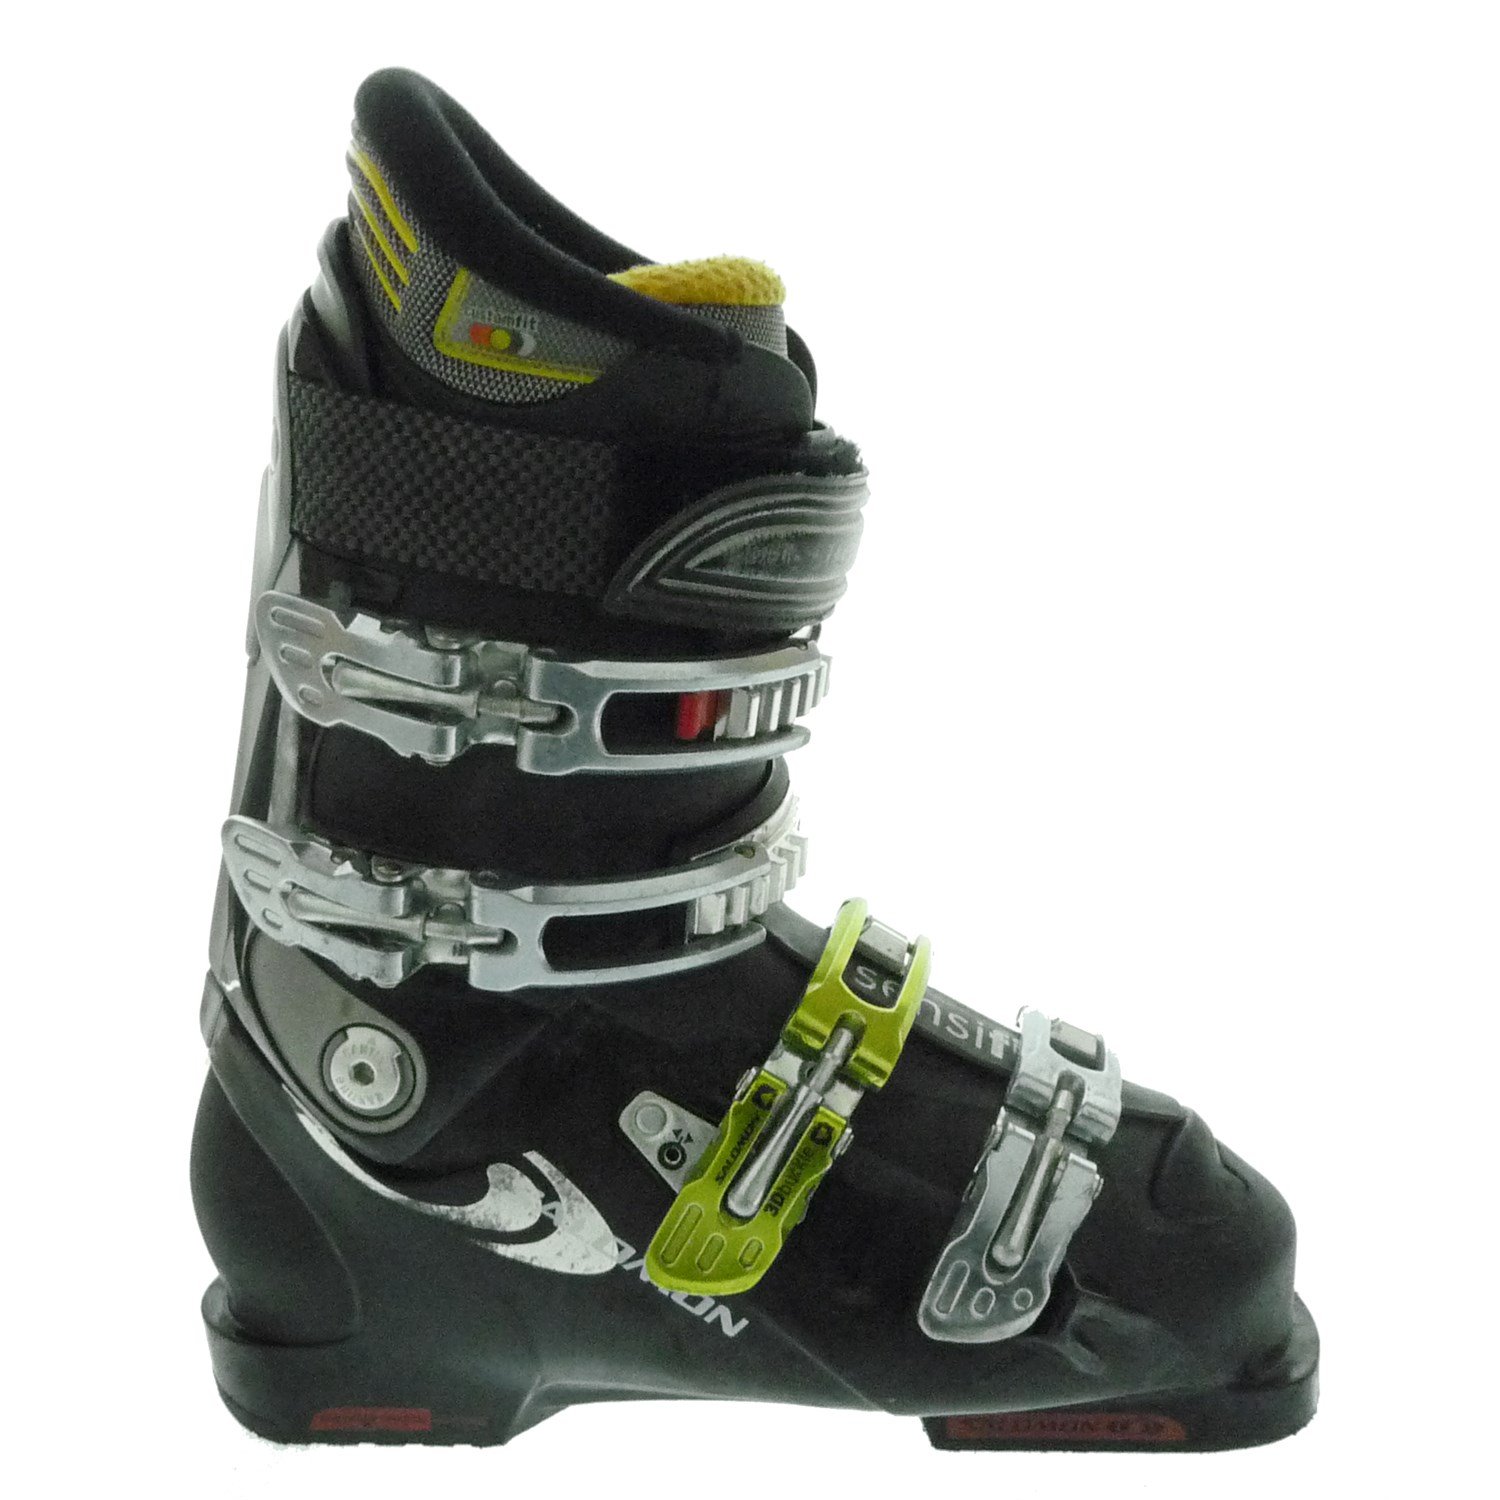 Salomon X-Wave 8.0 Ski Boots - Used 